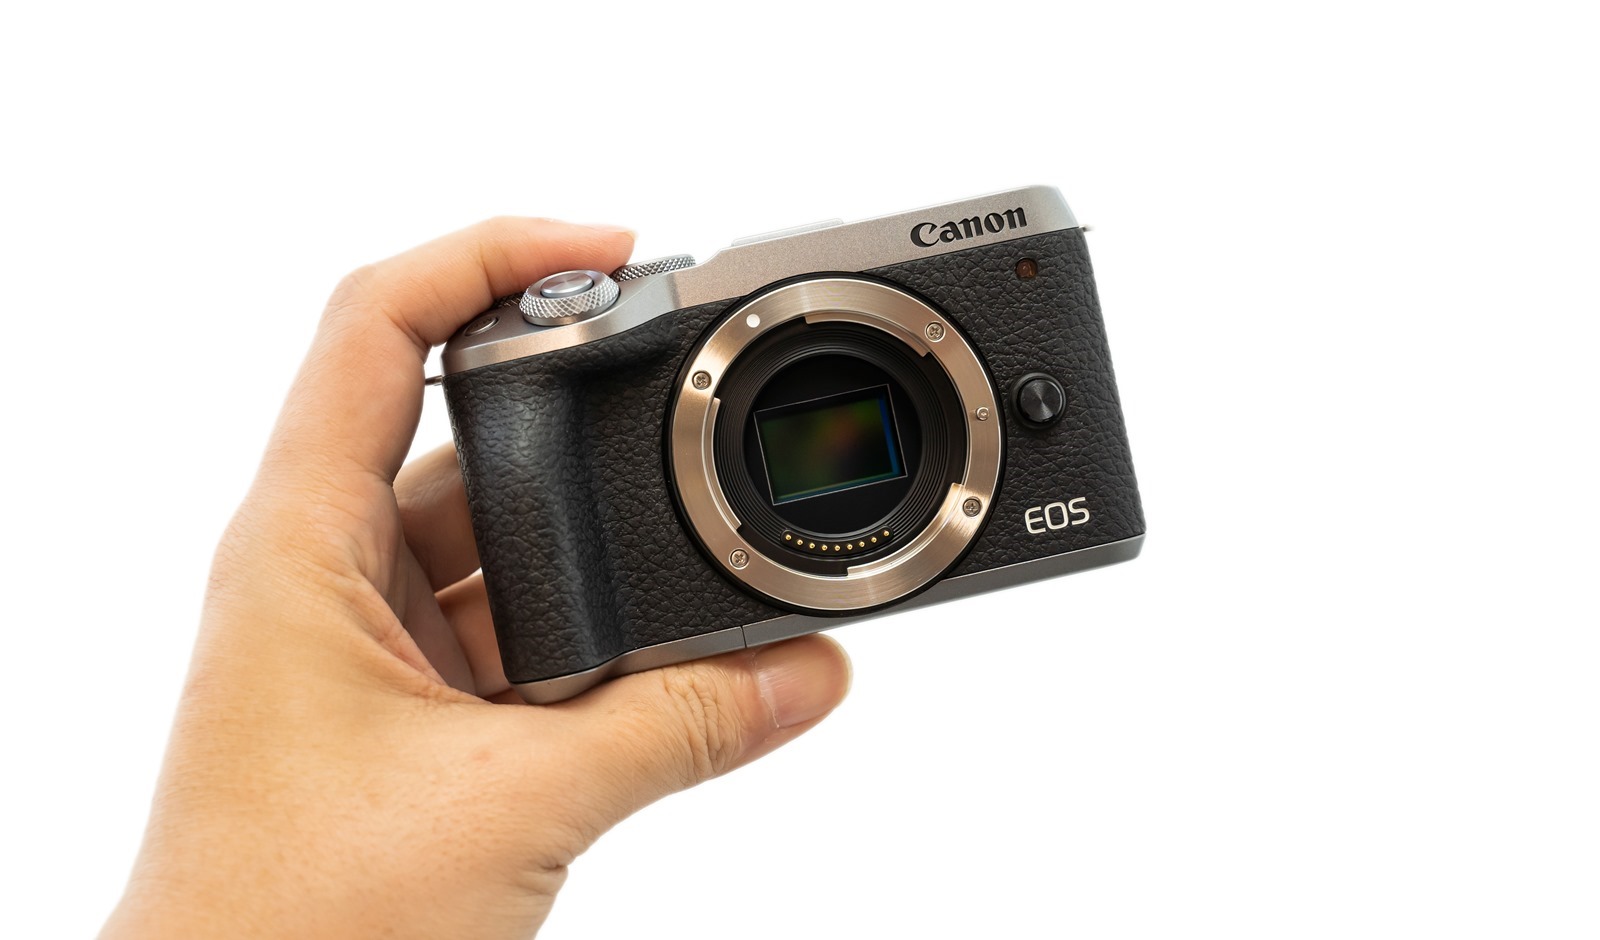 Canon EOS M6 Mark II 入手開箱分享，還有與 M6 比較 / TT350C 閃光燈相容性問題 @3C 達人廖阿輝